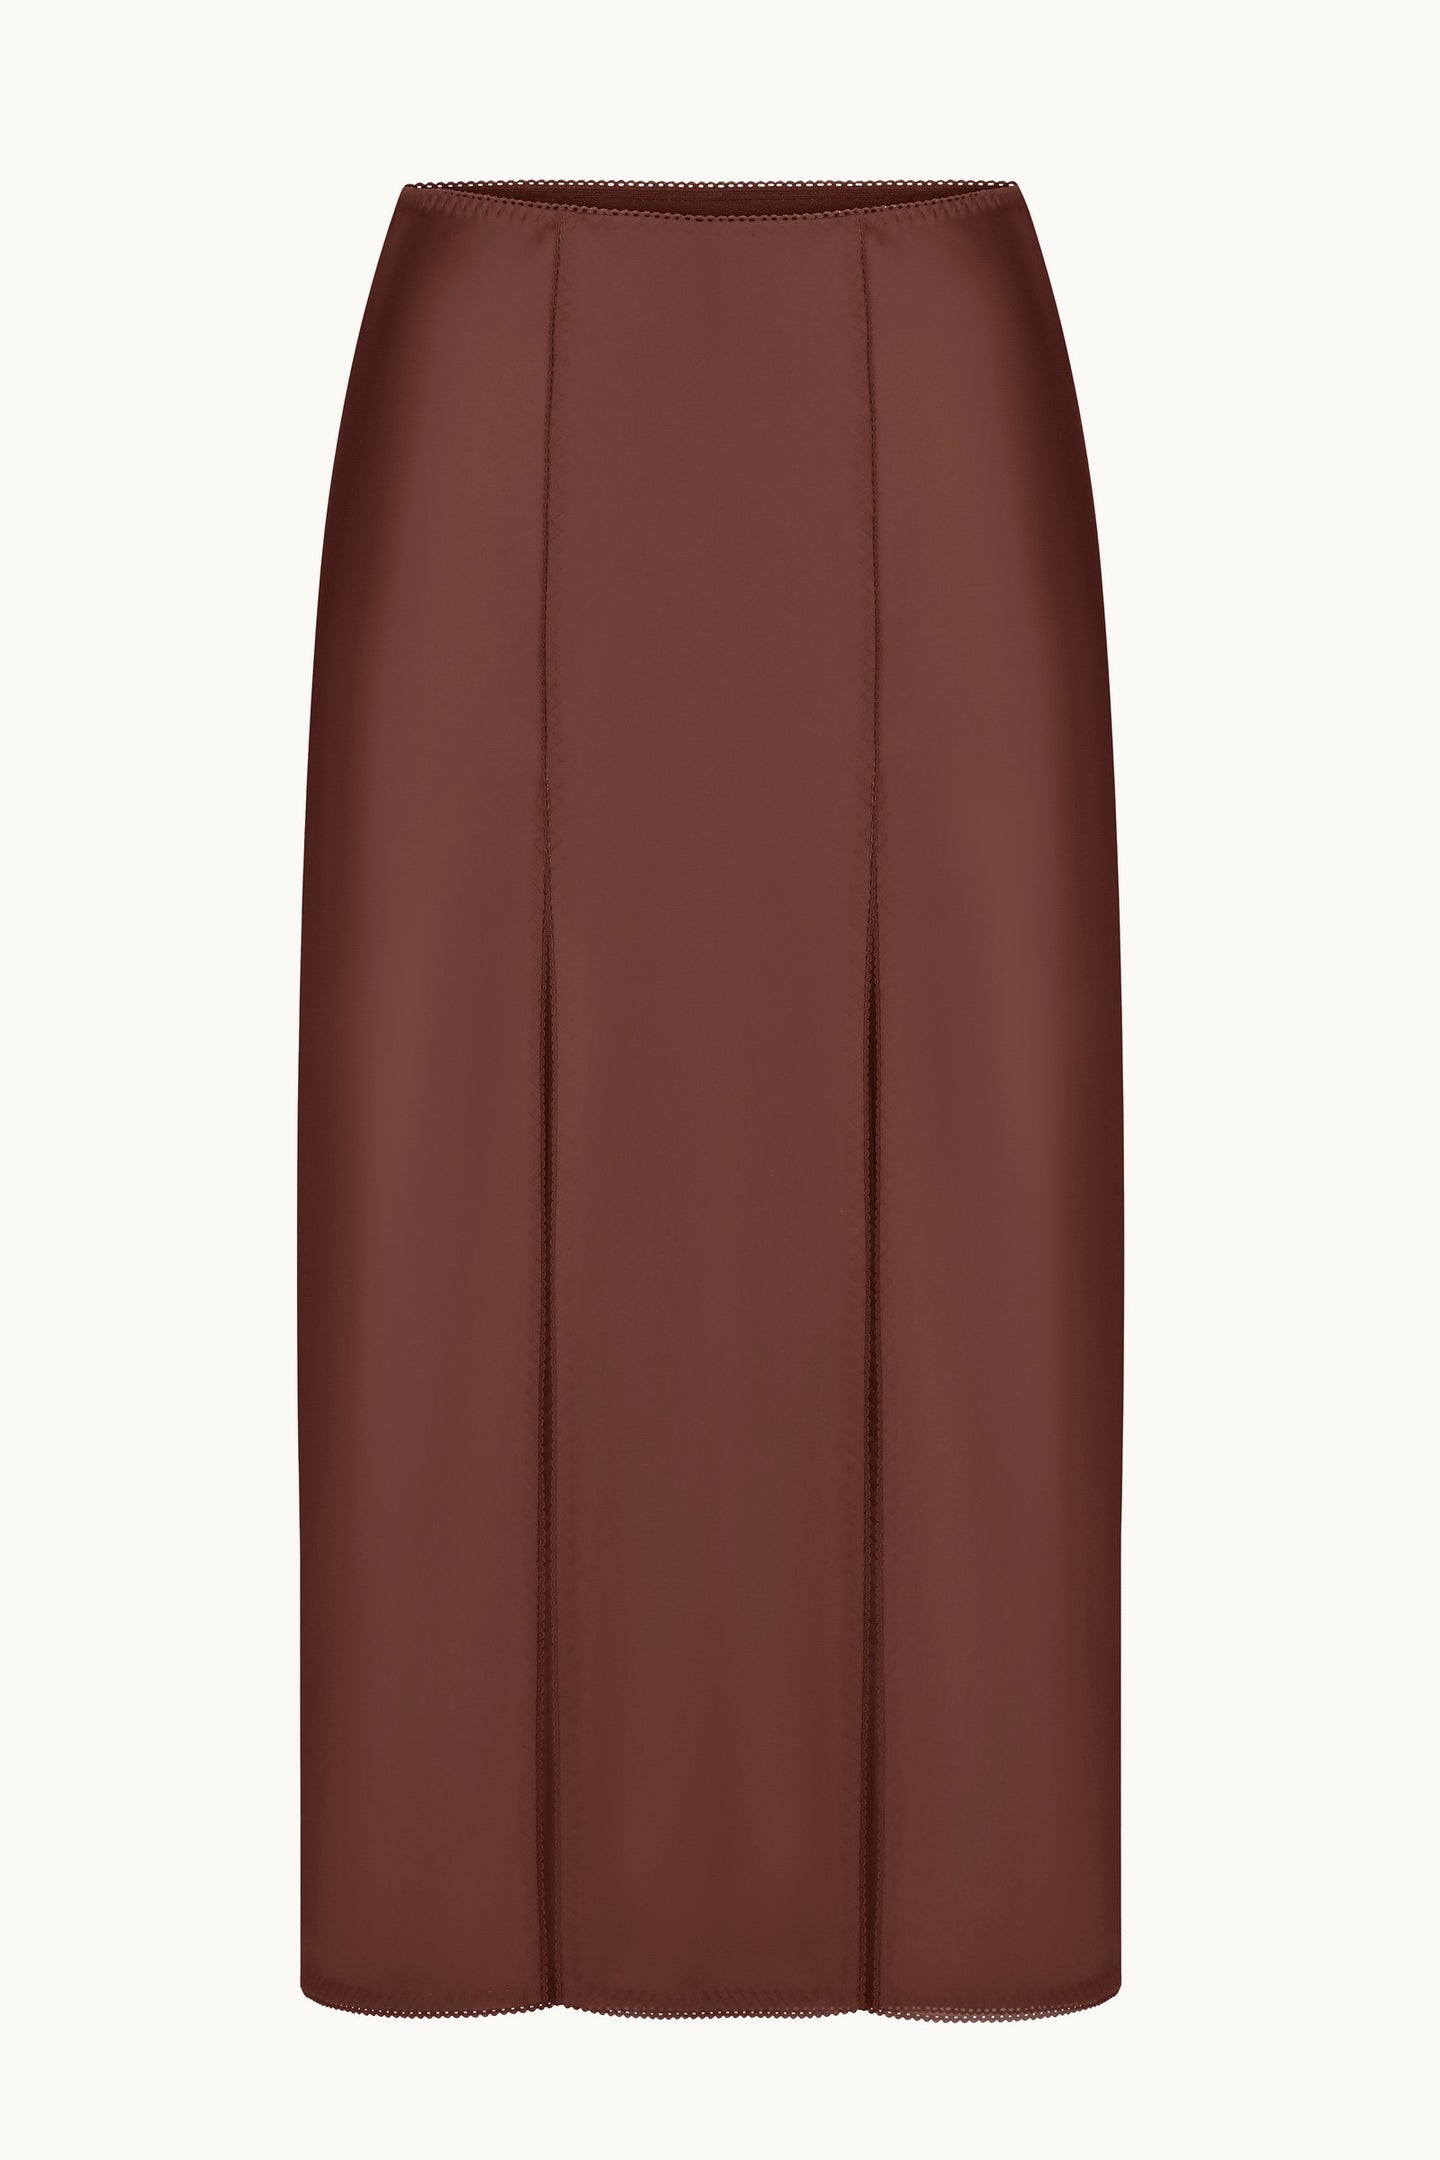 Zhenia brown skirt front view